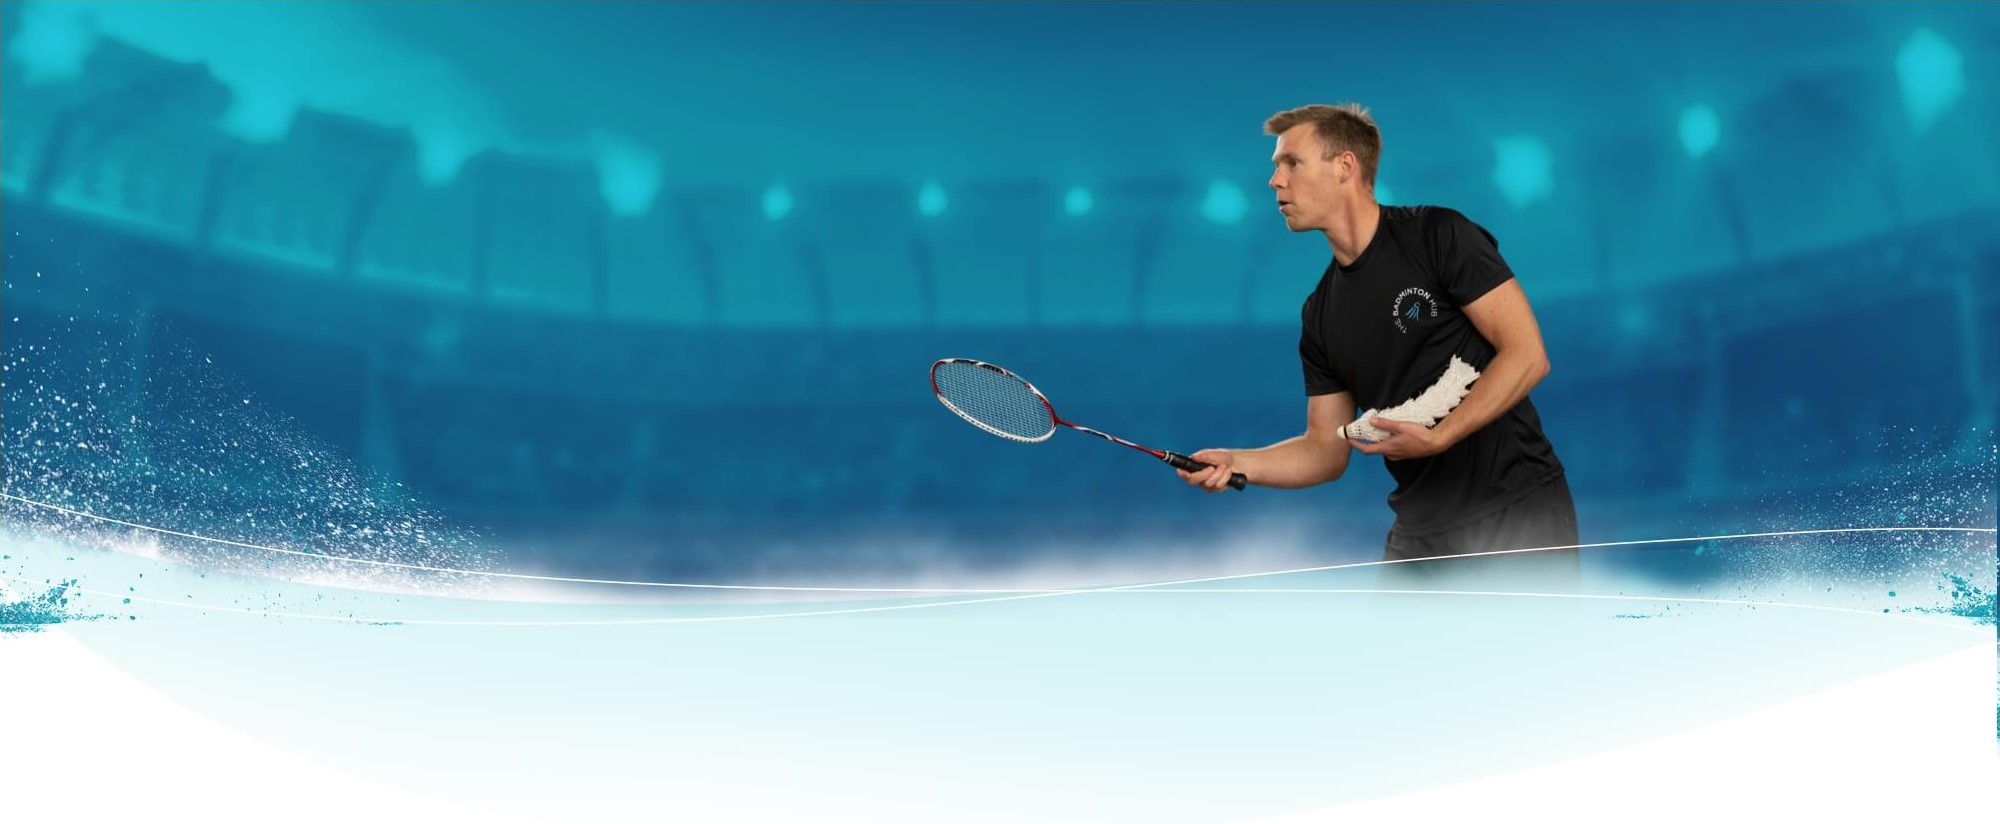 badminton singles coach melbourne